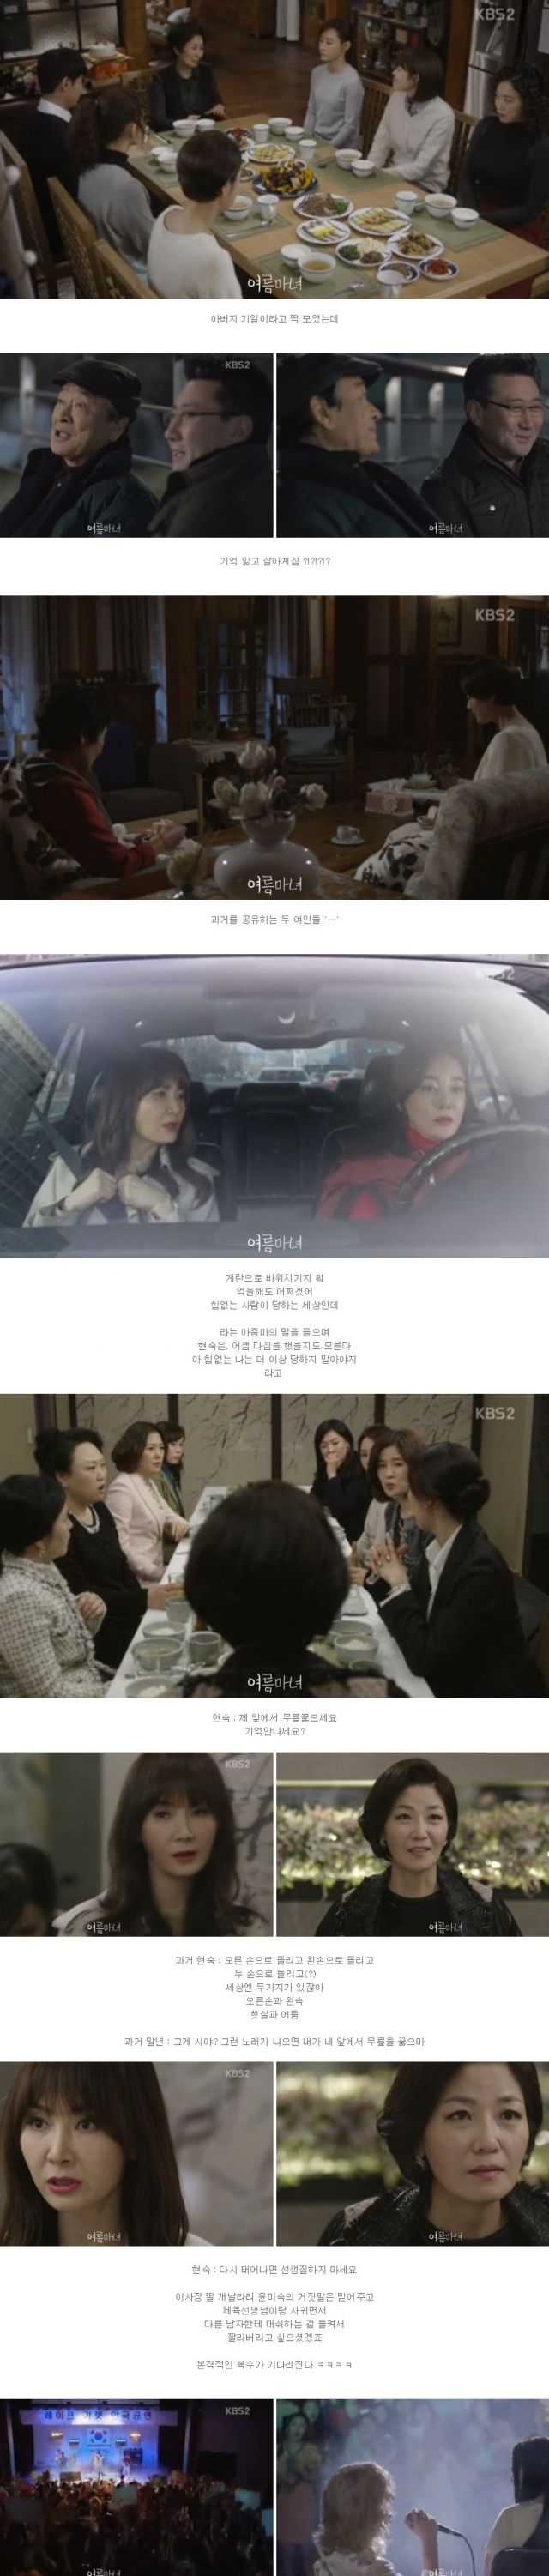 episode 4 captures for the Korean drama 'Unkind Women'